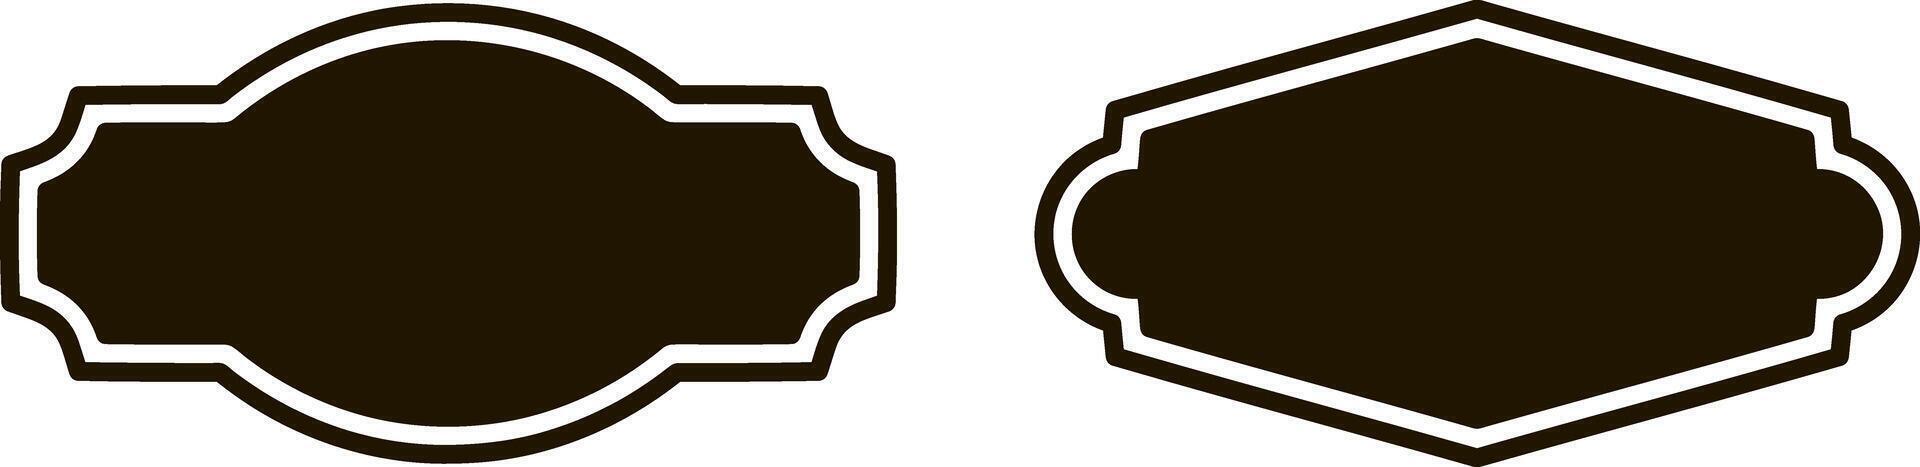 Stencil badge icon Frame border vector illustration